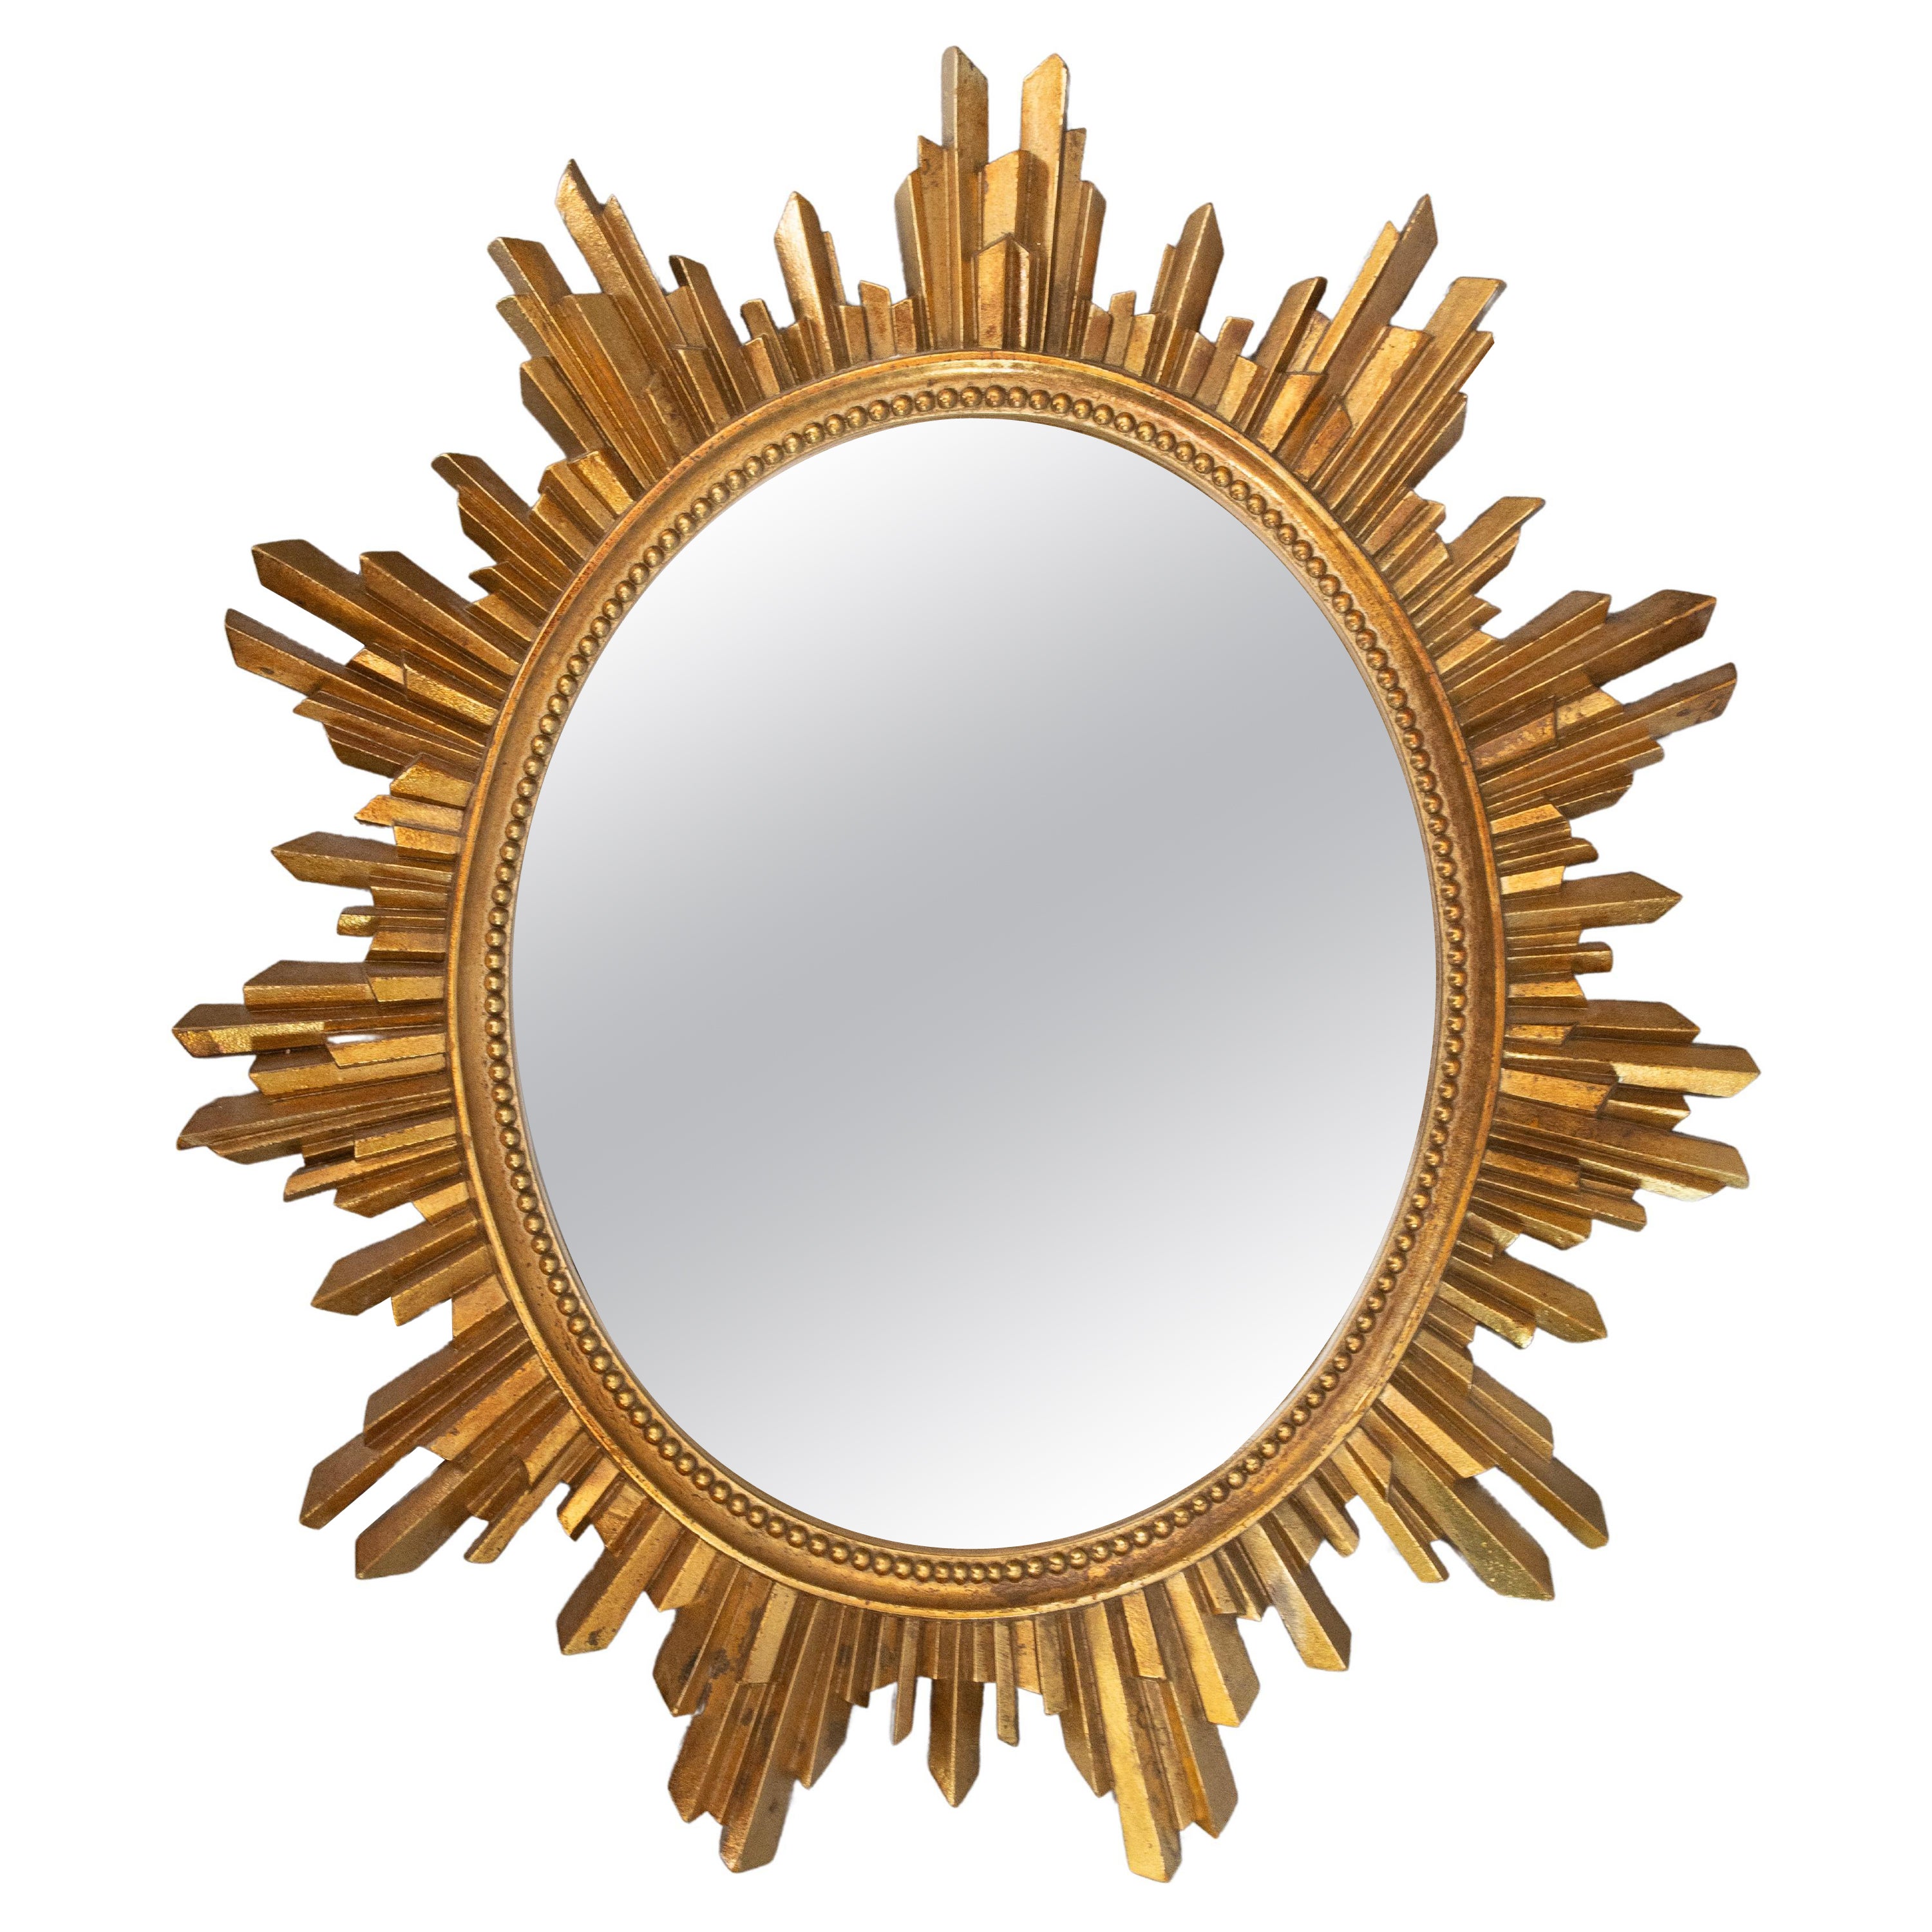 Mid-20th Century French Gilt Sunburst Starburst Oval Mirror